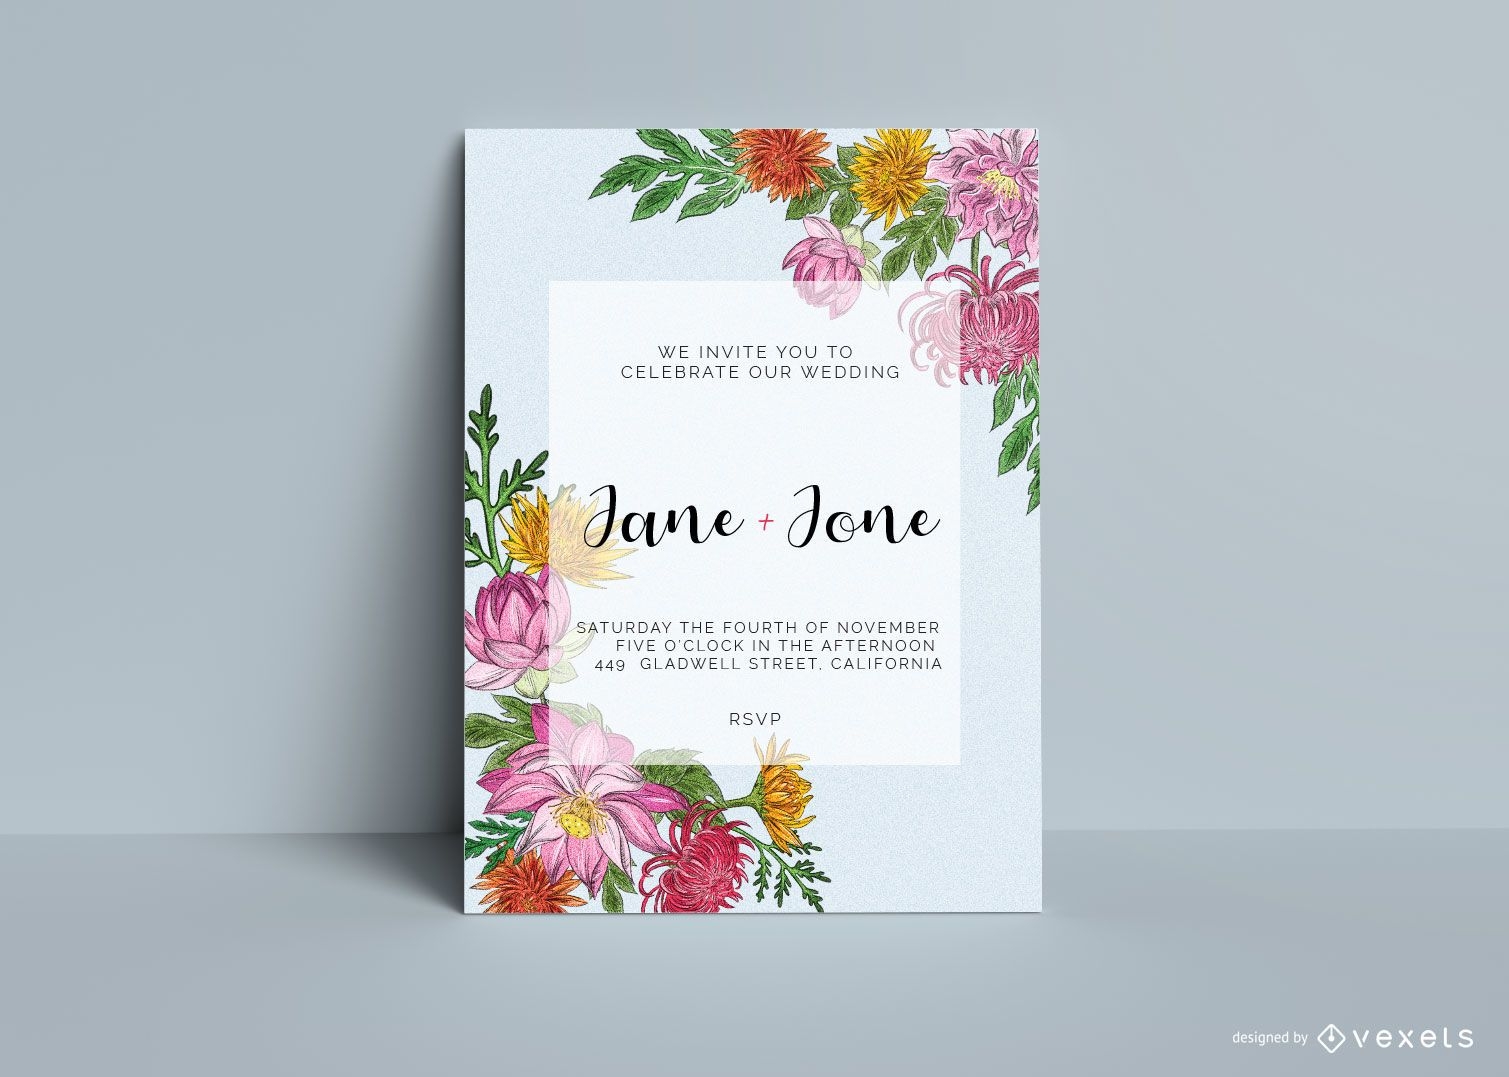 Floral wedding card invitation